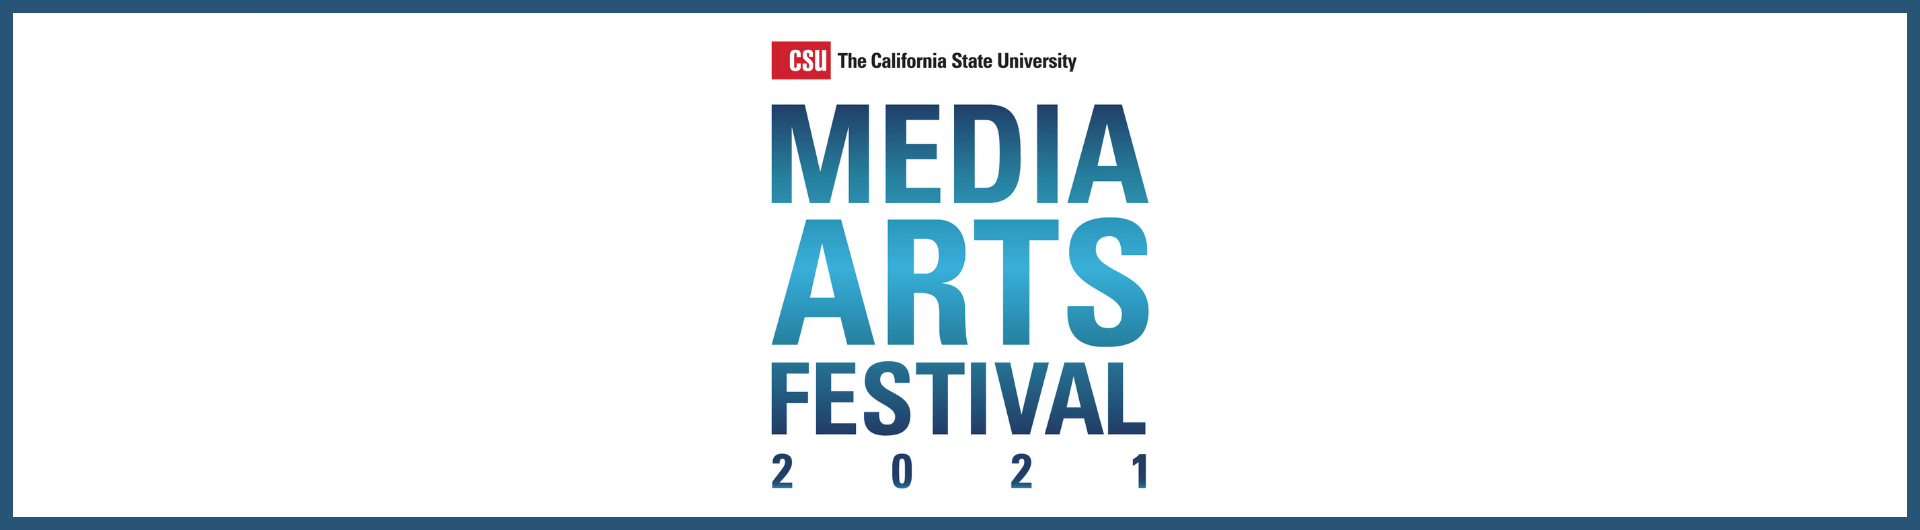 FEA Banner_CSU Media Arts Festival